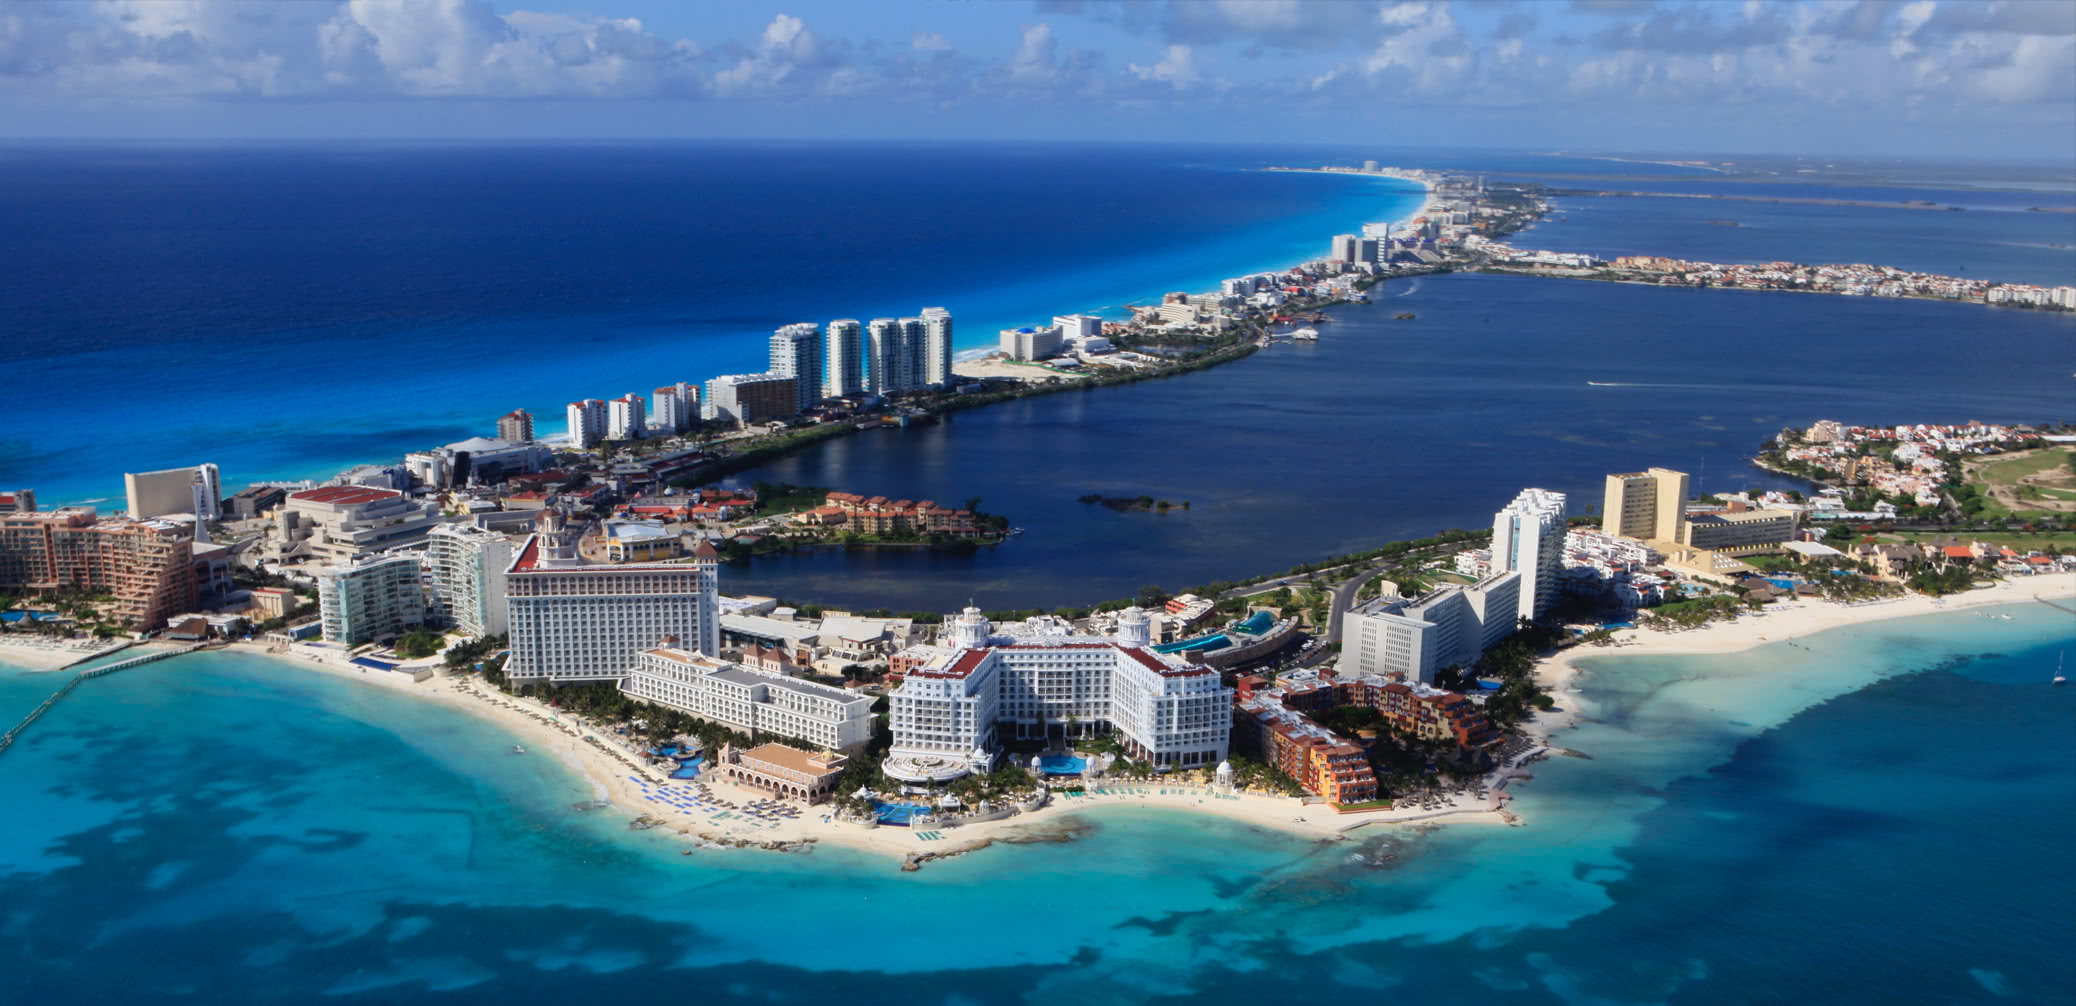 Best Marriott Hotels In Cancun, Kempinski Vs. Westin Vs. JW Marriott